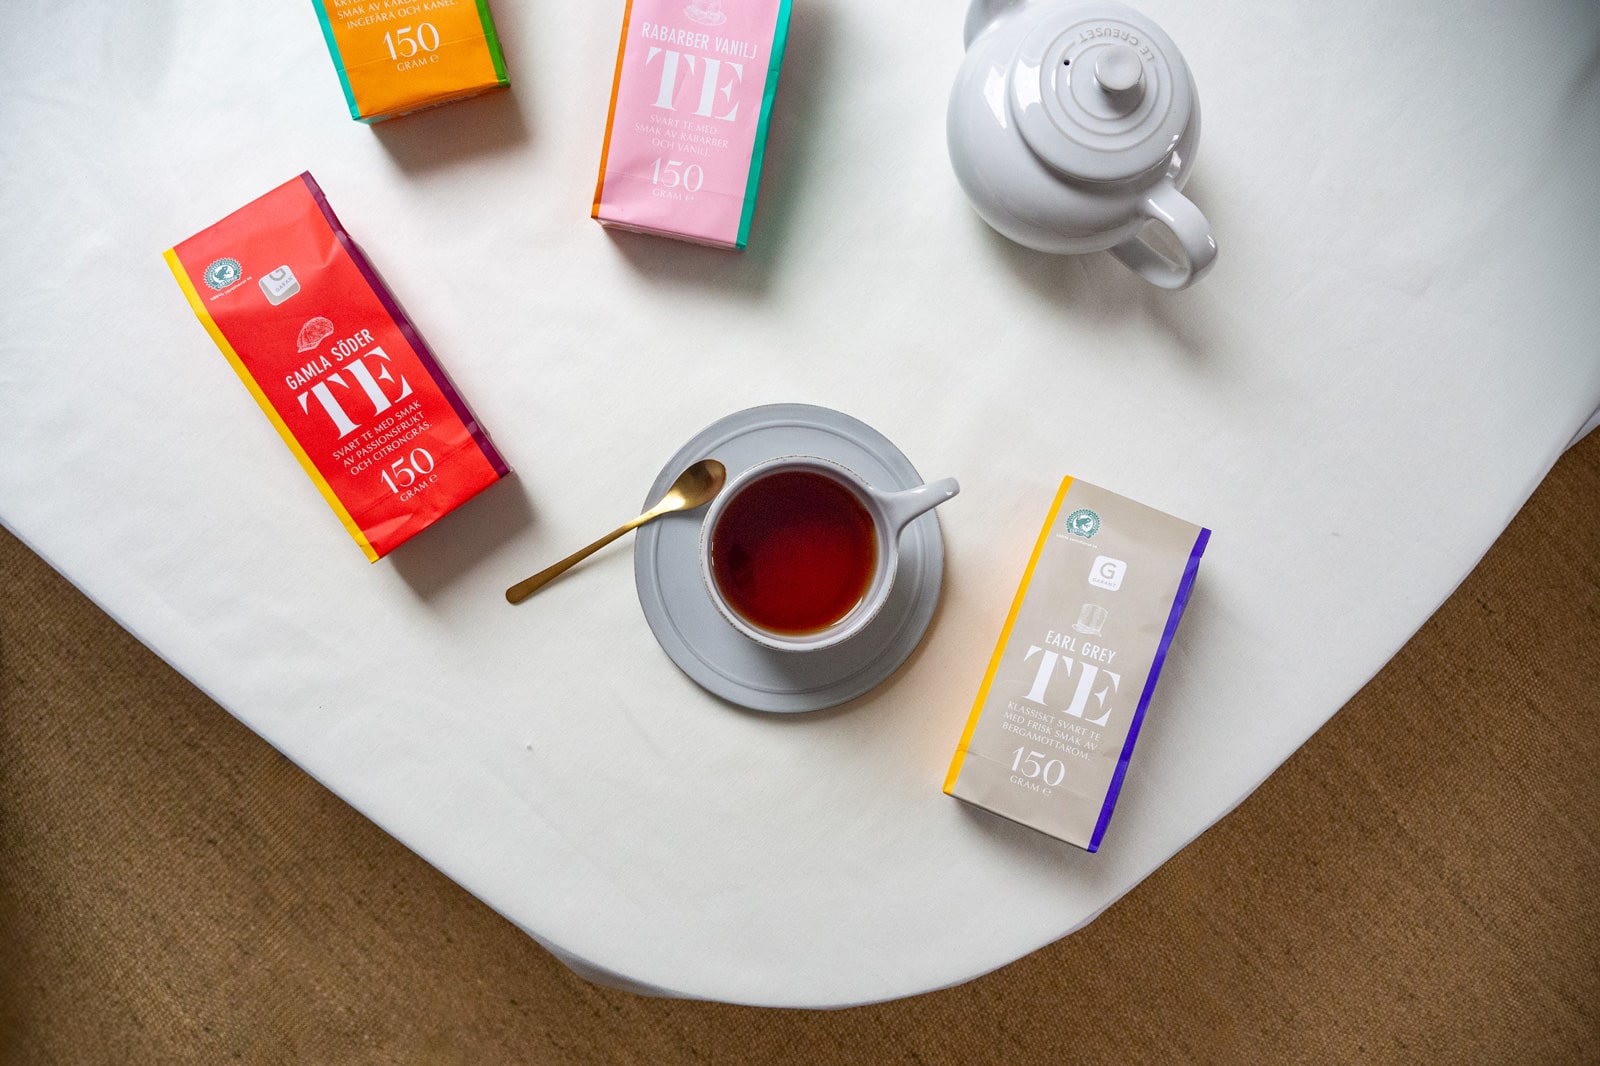 Four types of tea with cute pop designs from Nordic Swedish food manufacturer Garant (Earl Gray, Gumla Seder, Rhubarb Vanilla, Chai Masala)